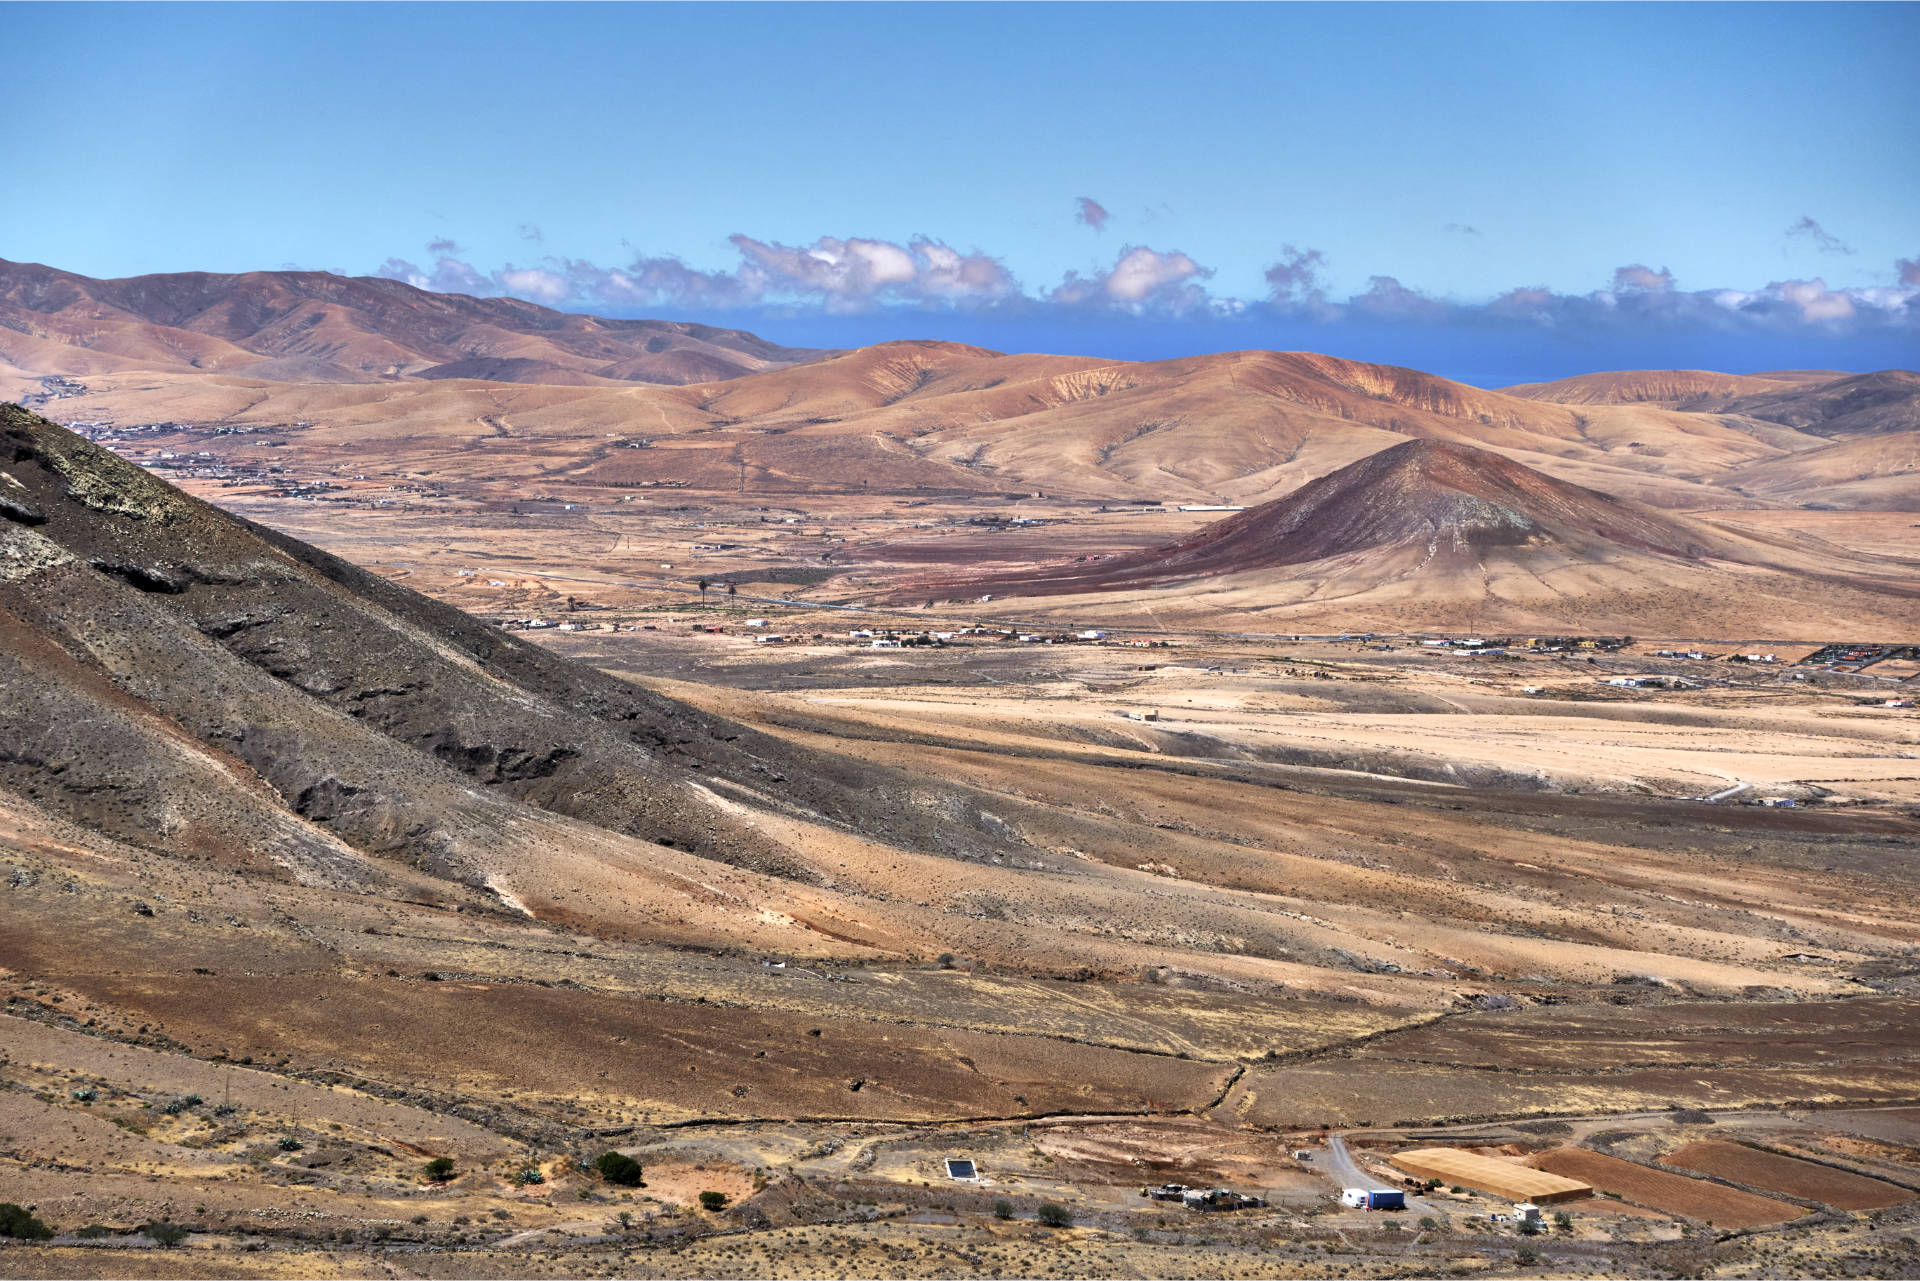 Trailrunning Fuerteventura – am degollada zwischen Morro de Facay (520m) und Morro de Cagadas Blandas (525m).